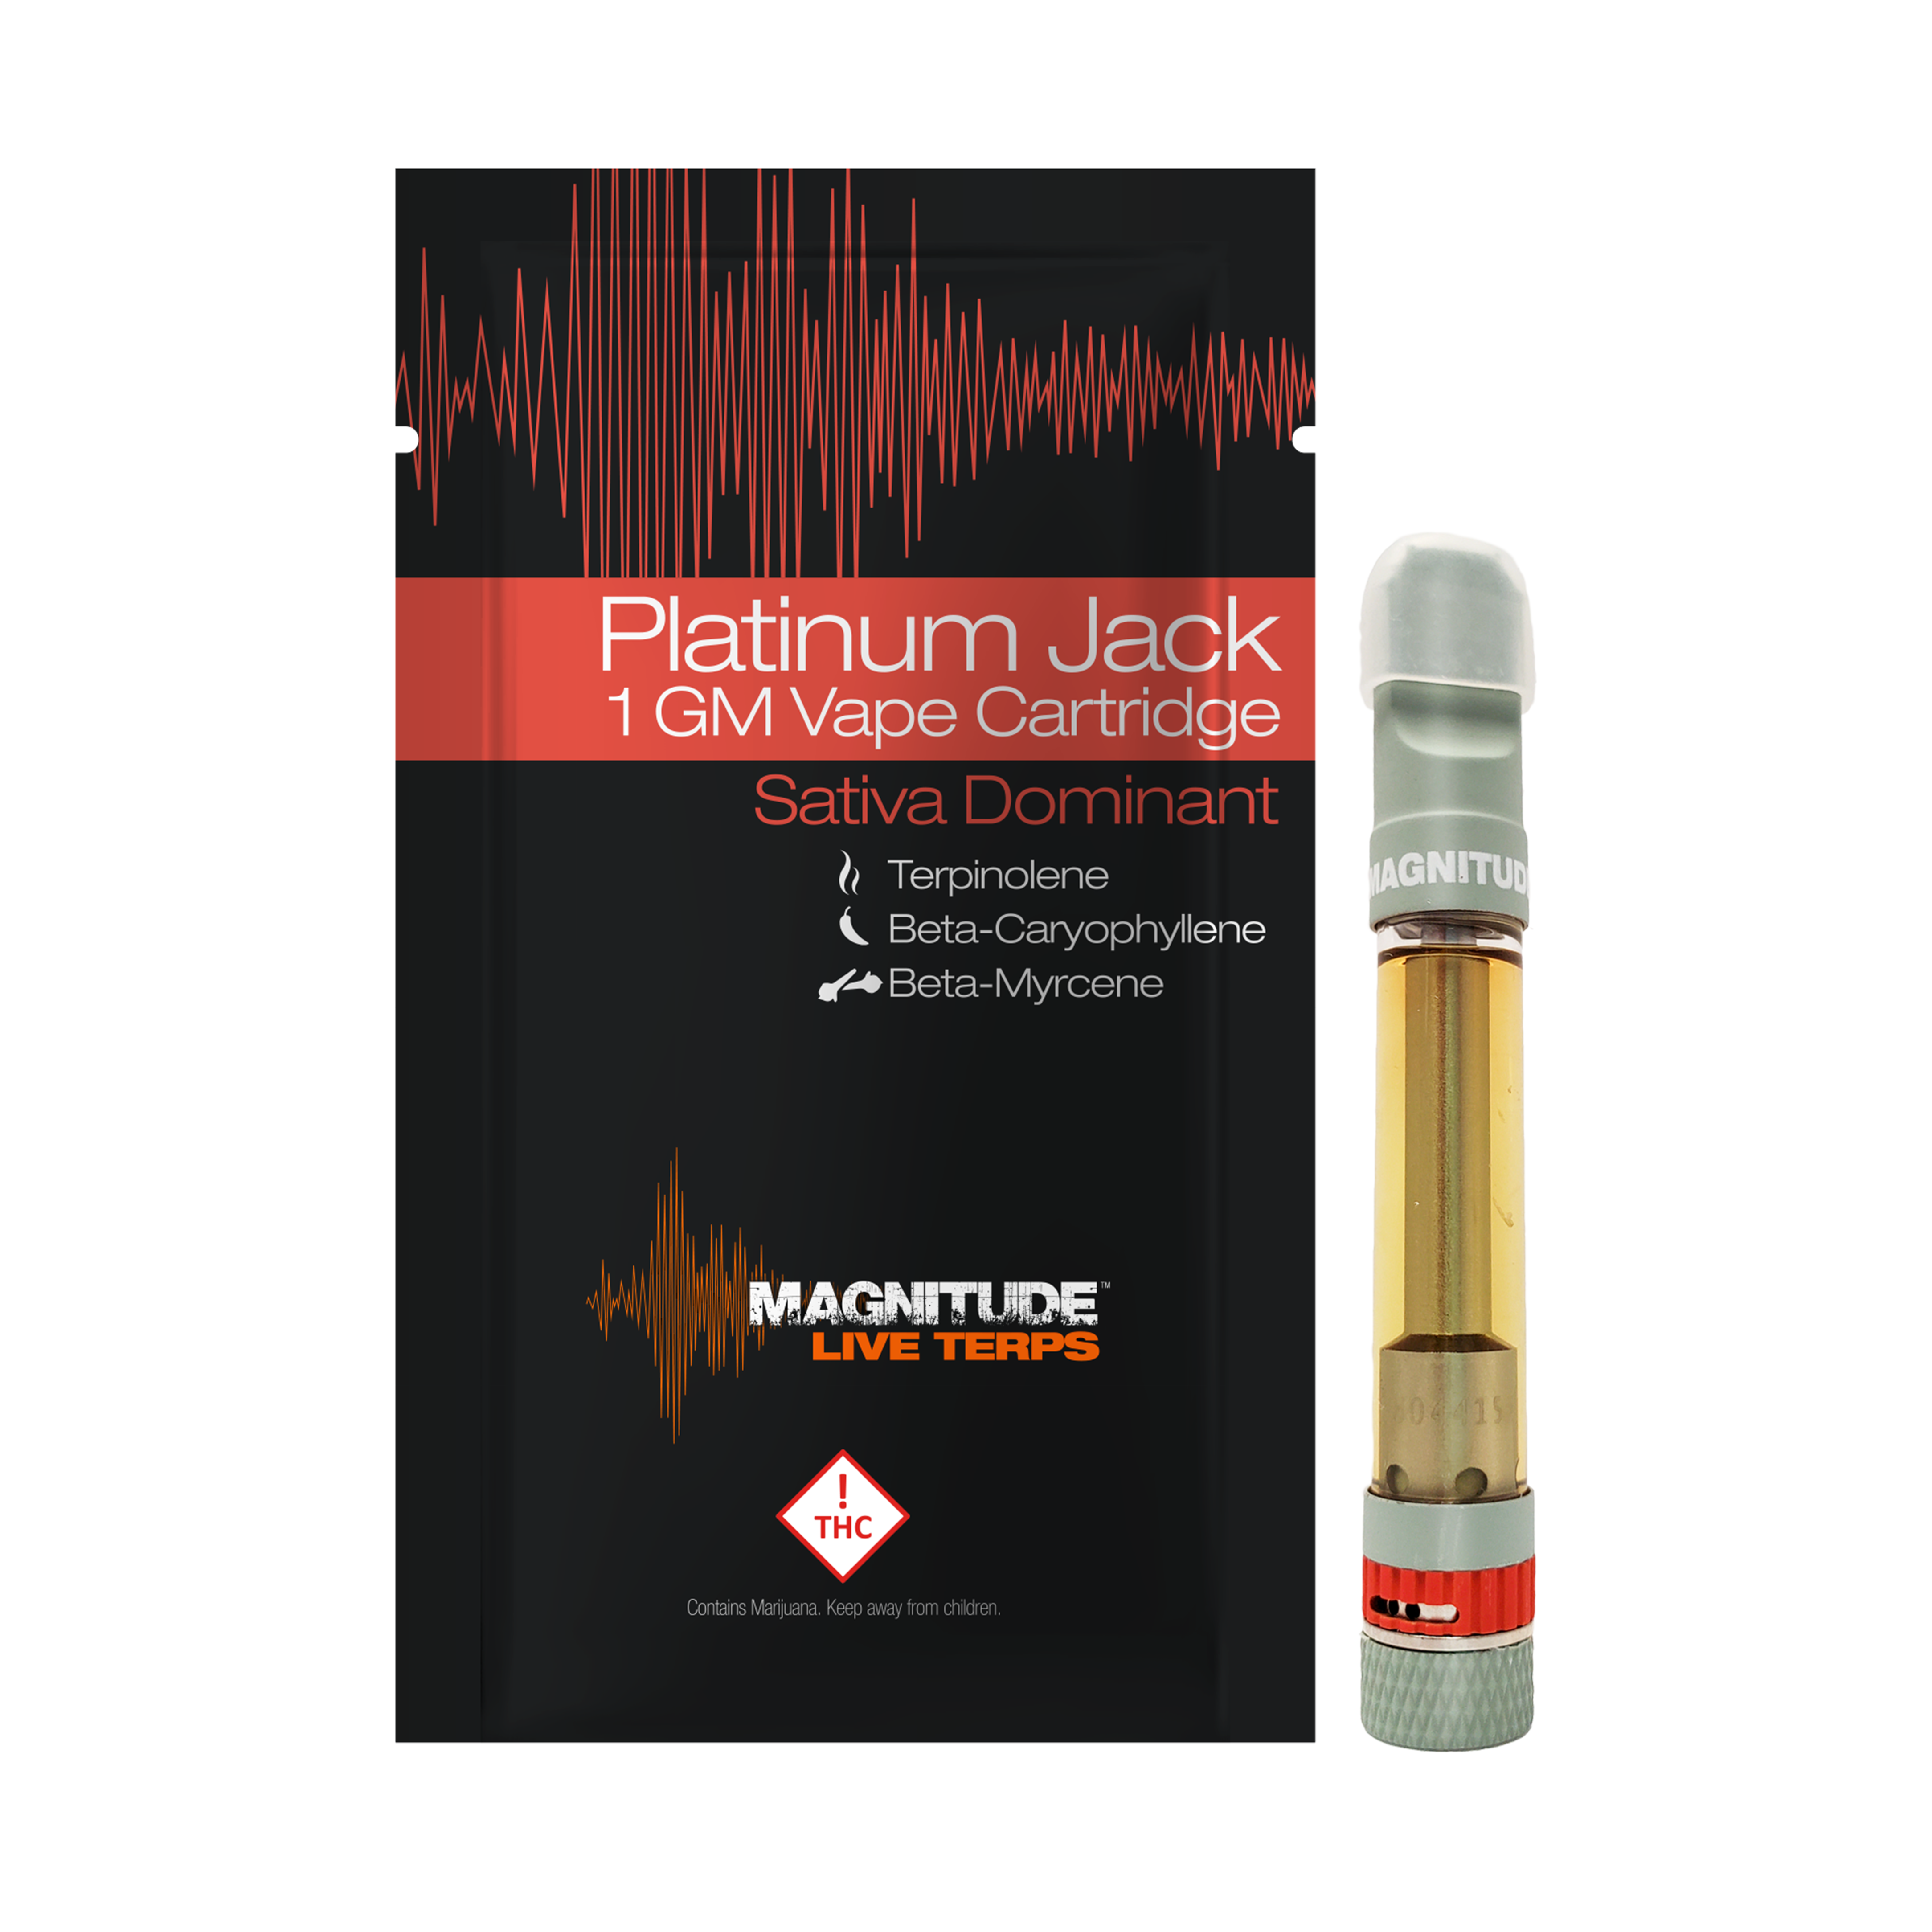 Magnitude Sativa Platinum Jack Live Terp Cart 1g